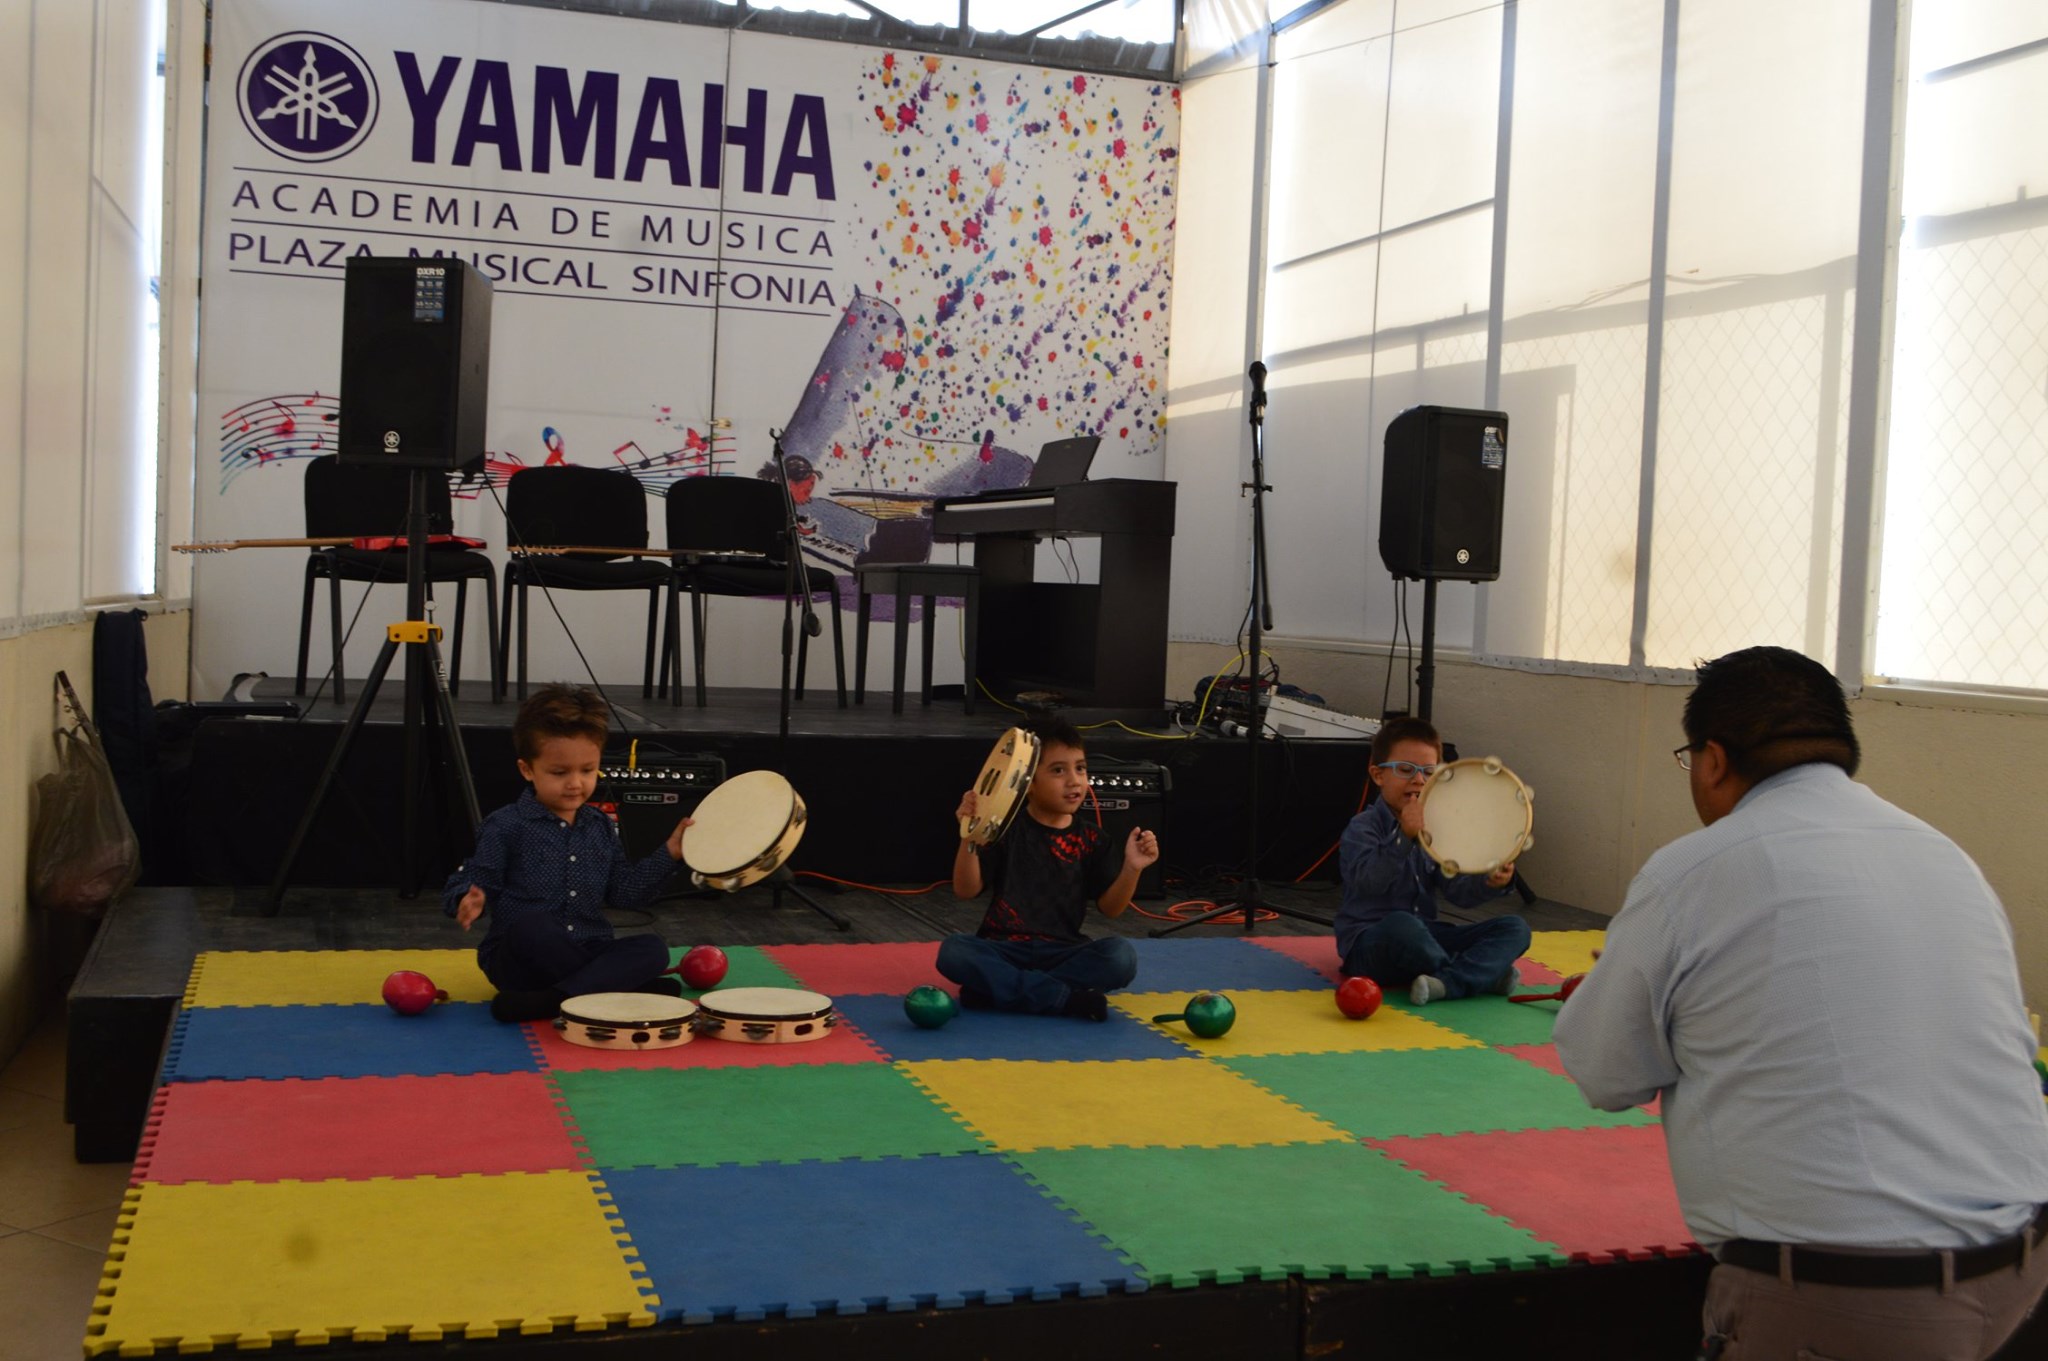 Academia de Música Yamaha Puebla